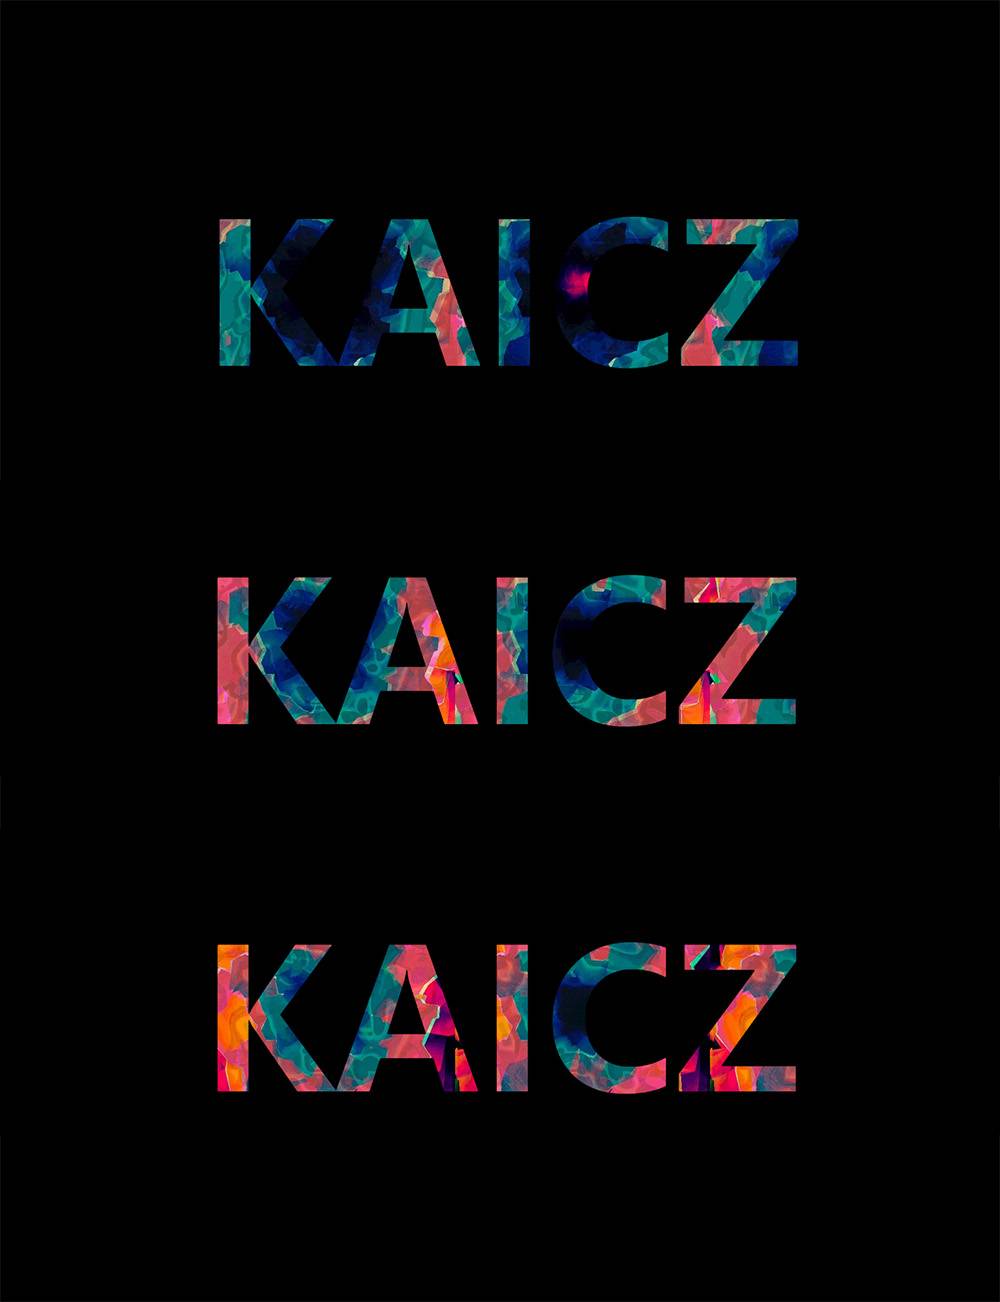 KAICZ随机变化的彩色文字背景动画特效